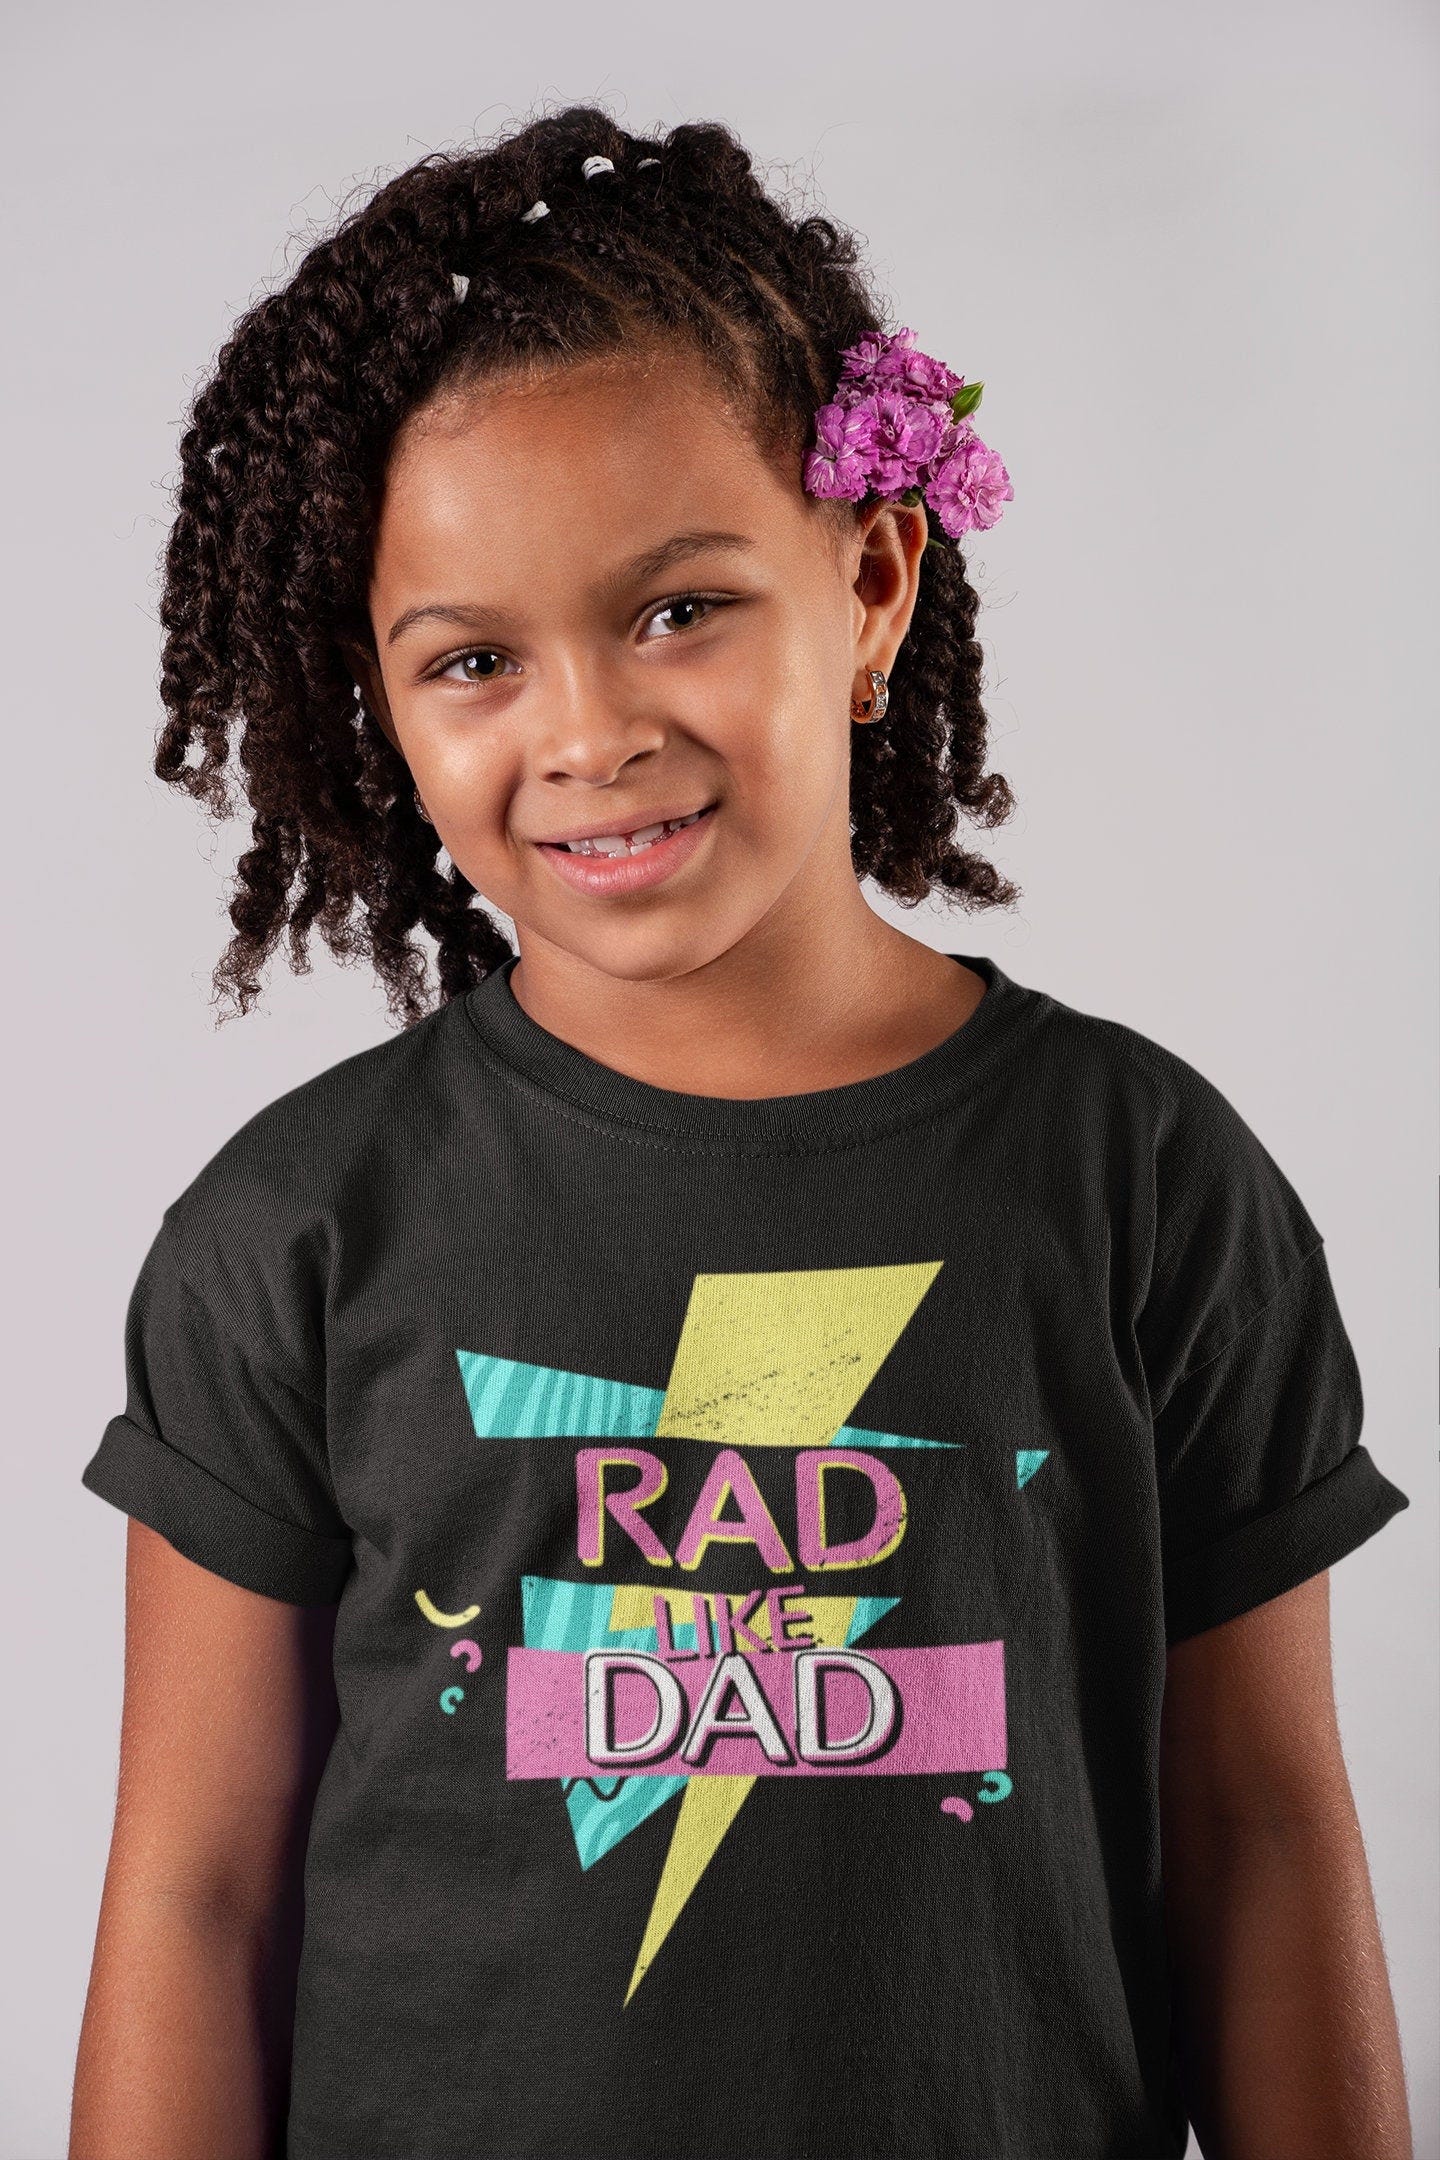 Rad Like Dad Kids Shirt | Retro 90s Kids Shirt | 80s Dad and Child Shirt